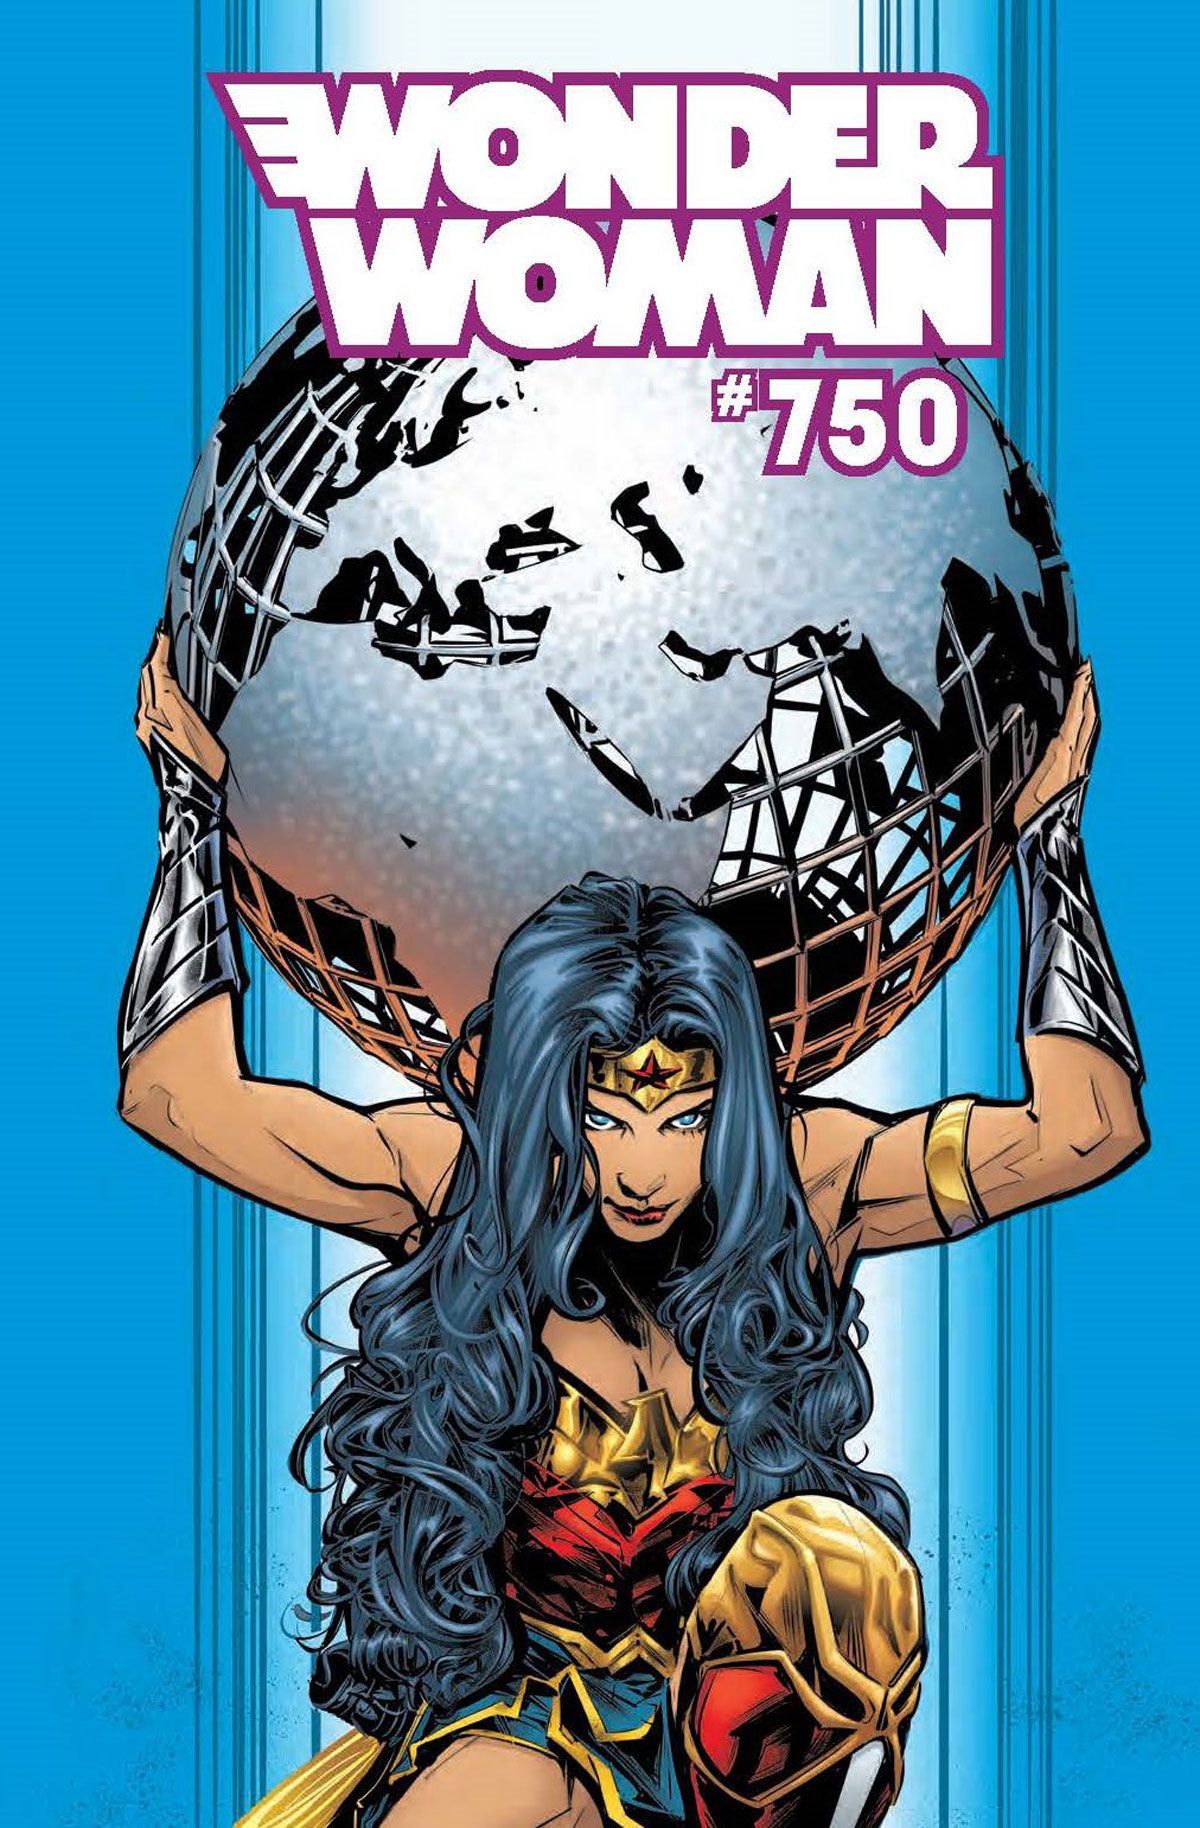 Wonder Woman 750 cover by Joelle Jones